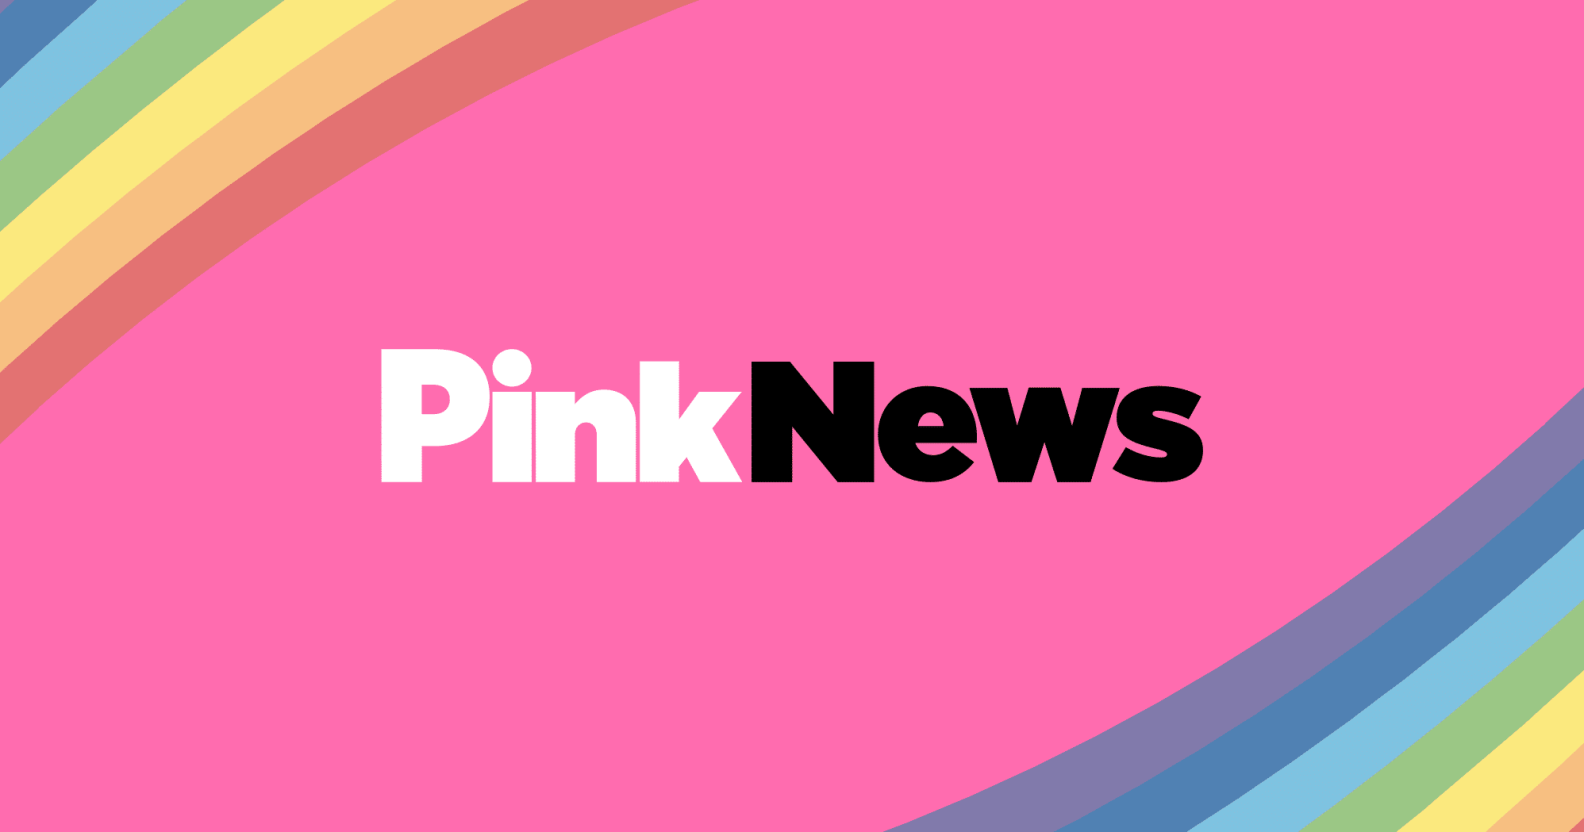 PinkNews logo on pink background with rainbow corners.